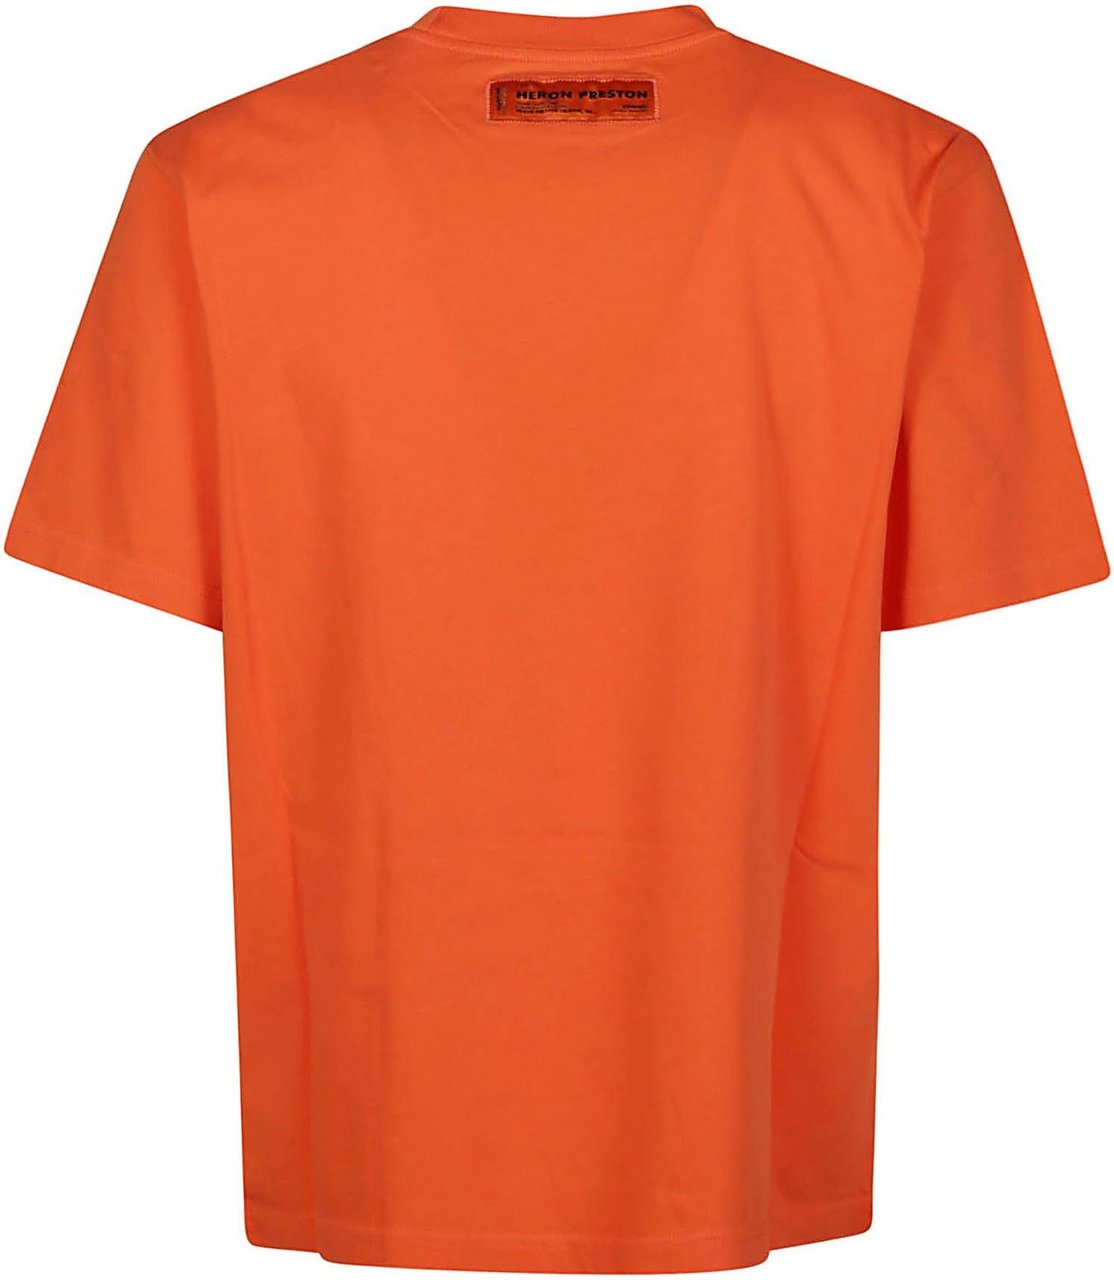 Heron Preston Hpny Embroidery T-shirt Yellow & Orange Geel